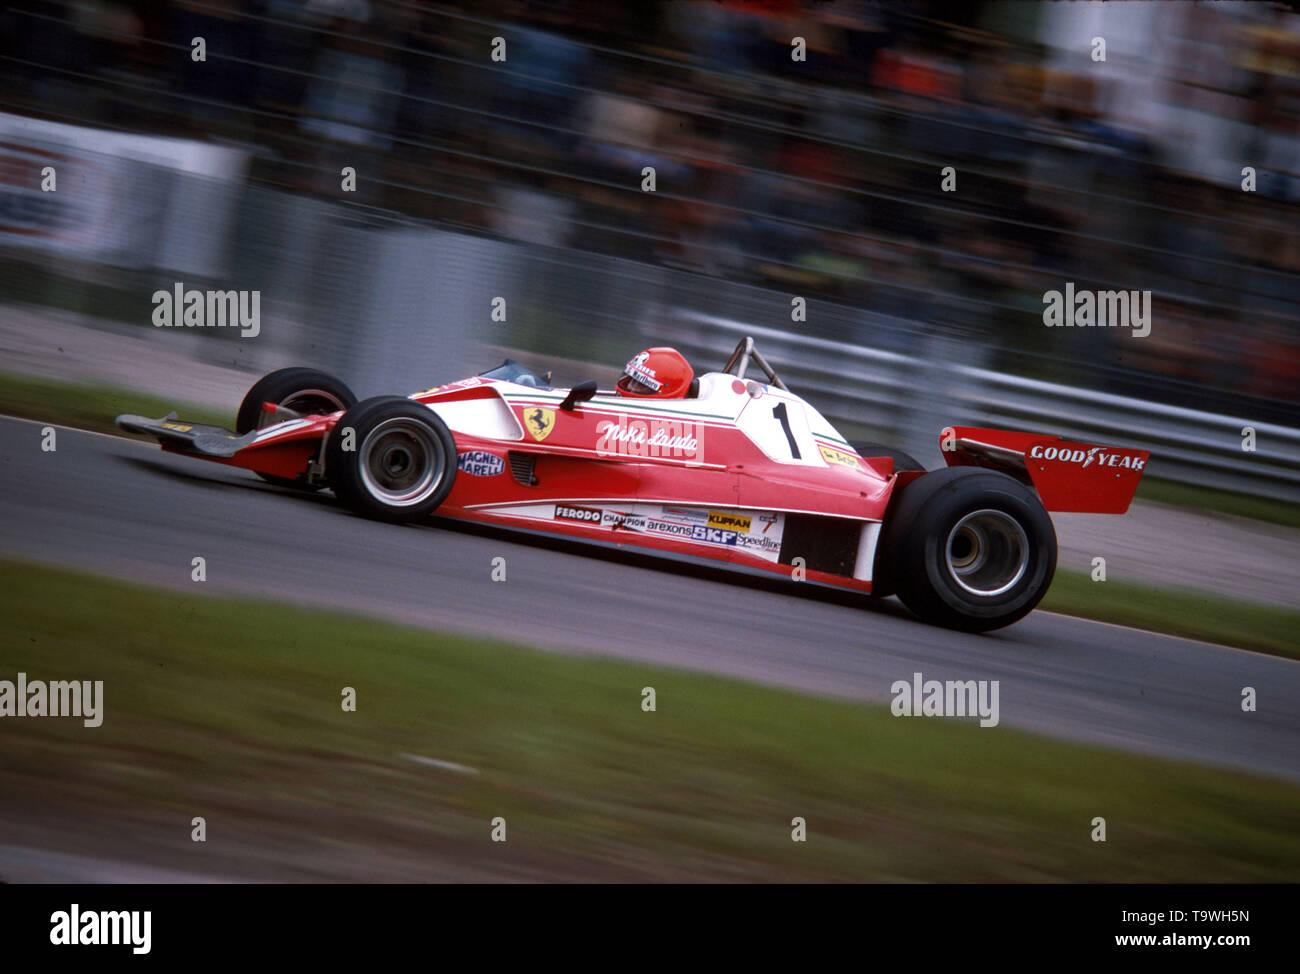 Formula 1, Grand Prix Italy 1976, Monza, 12.09.1976 Niki Lauda, Ferrari  312T2 www.hoch-zwei.net, copyright: HOCH ZWEI/Ronco | usage worldwide Stock  Photo - Alamy